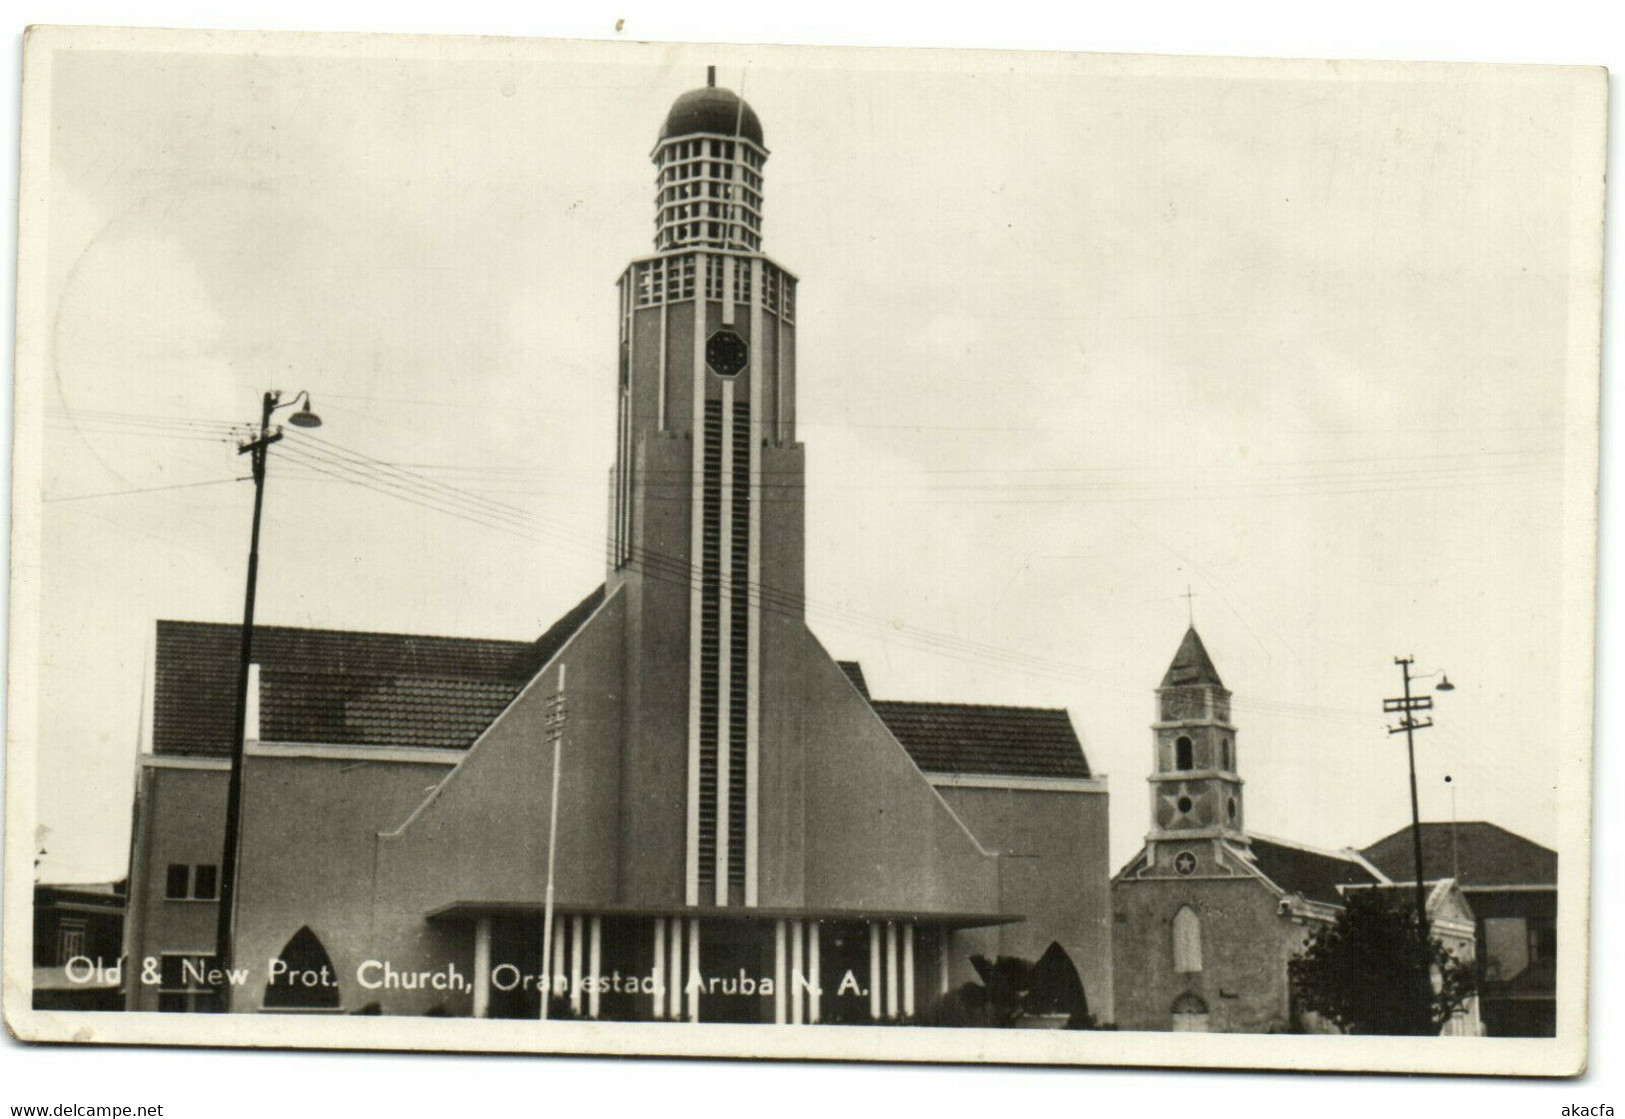 PC ARUBA, ORANJESTAD, OLD & NEW PROT. CHURCH, VintageREAL PHOTO Postcard(b30377) - Aruba